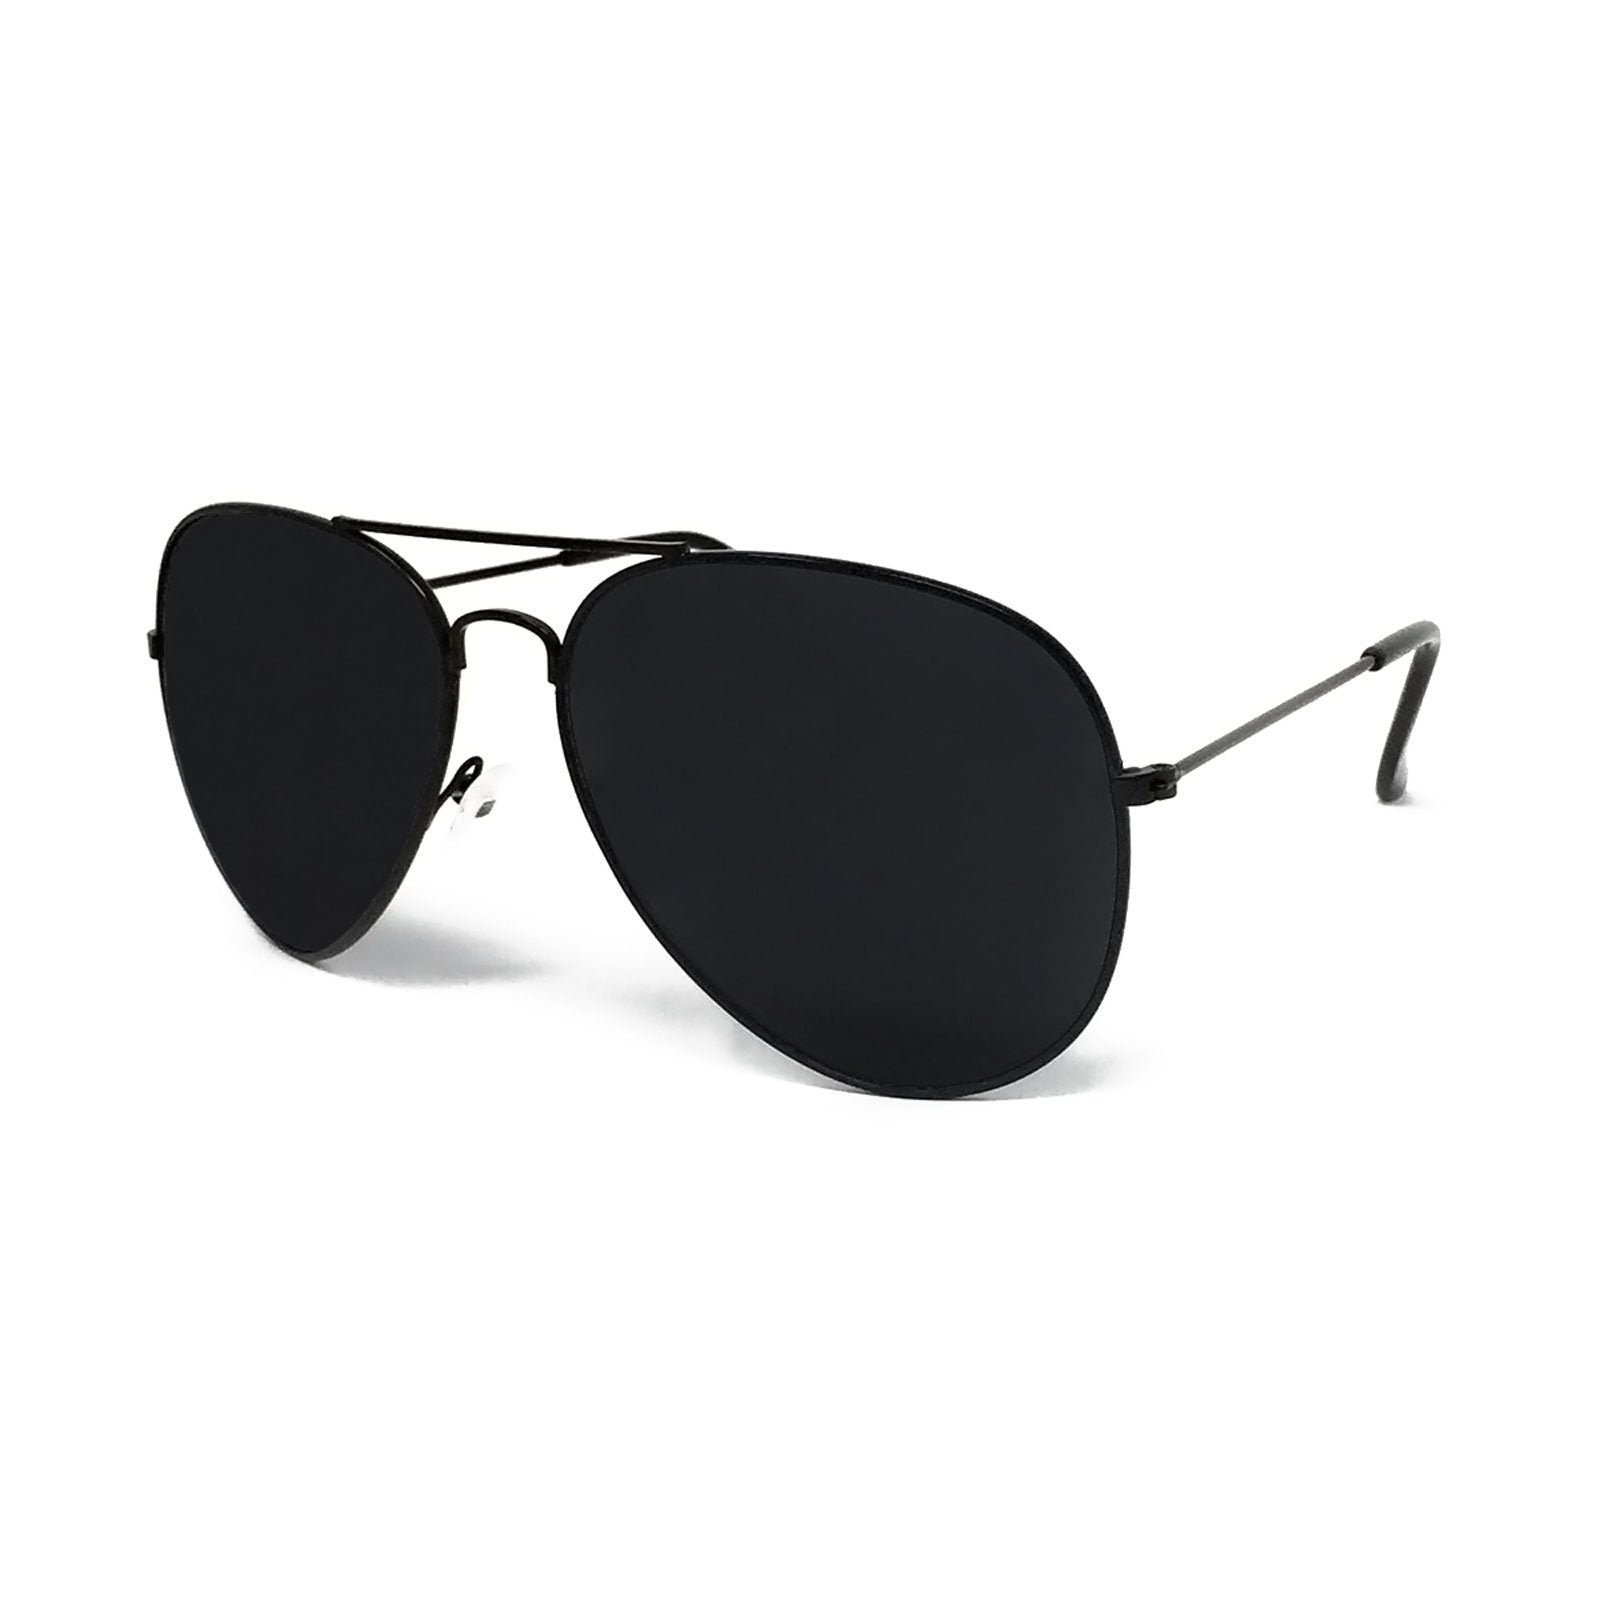 Wholesale Metal Frame Classic Sunglasses - Black Frame, Black Lens